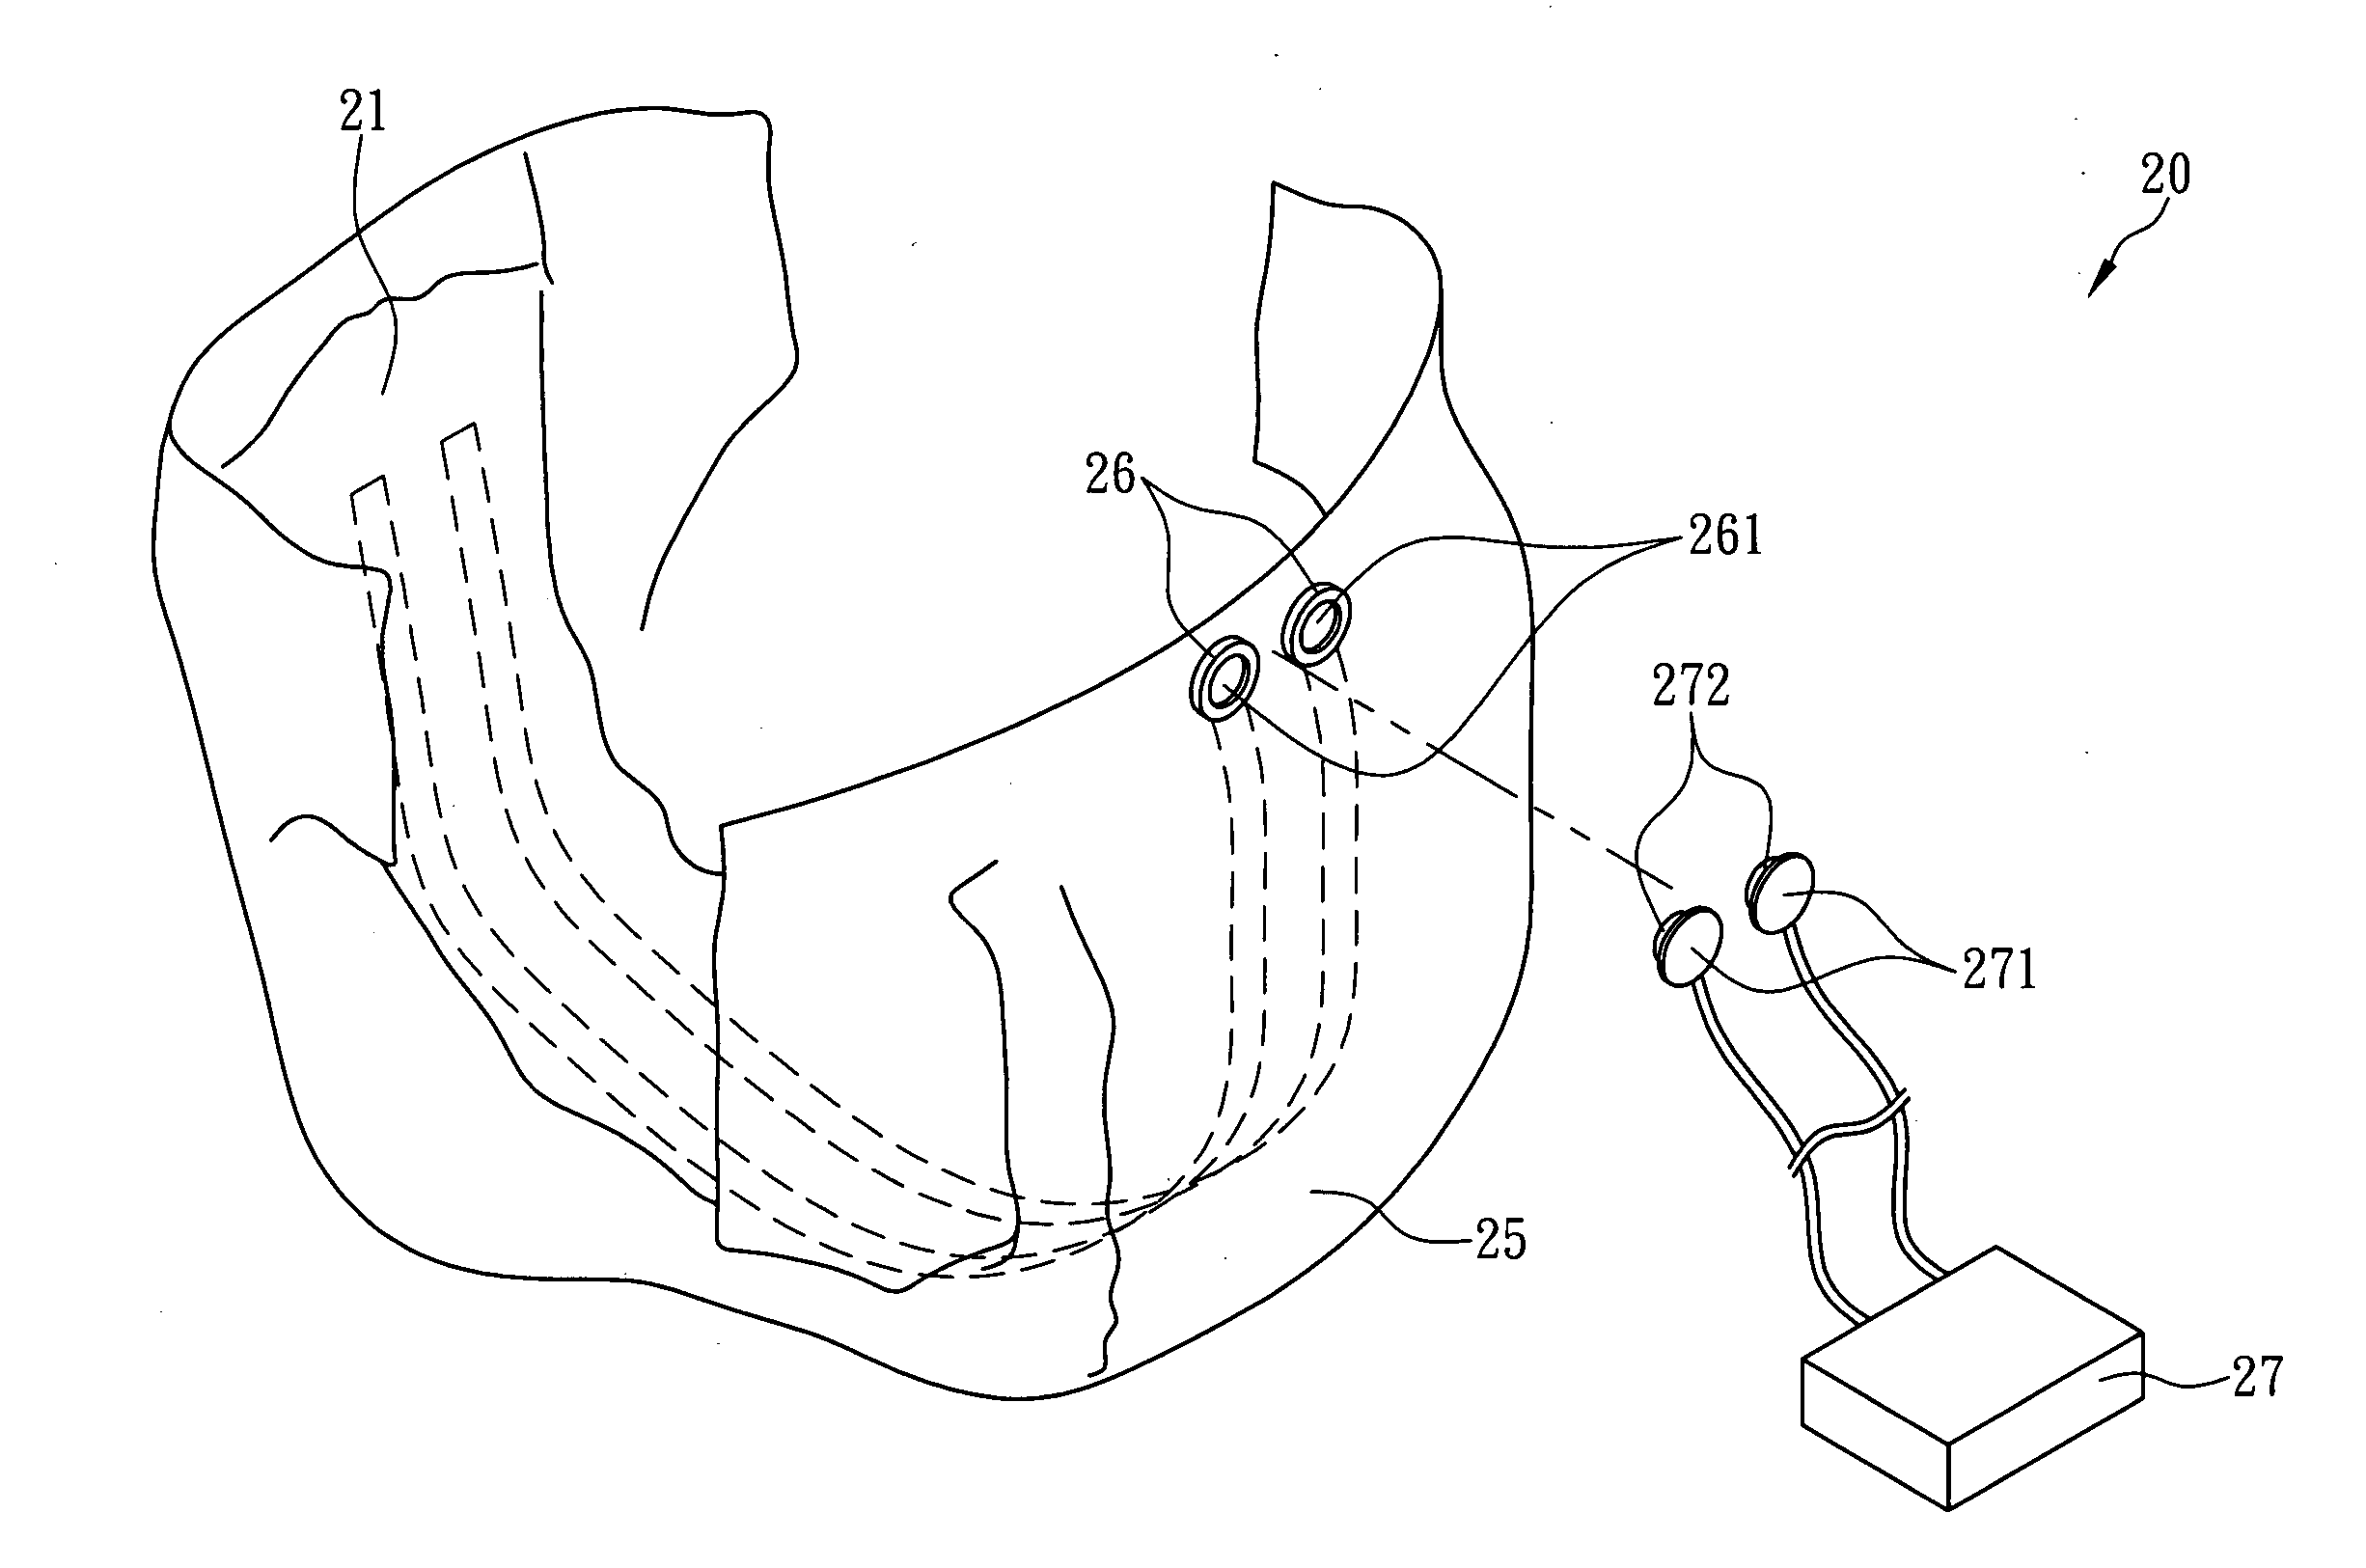 Diaper structure with urine sensor